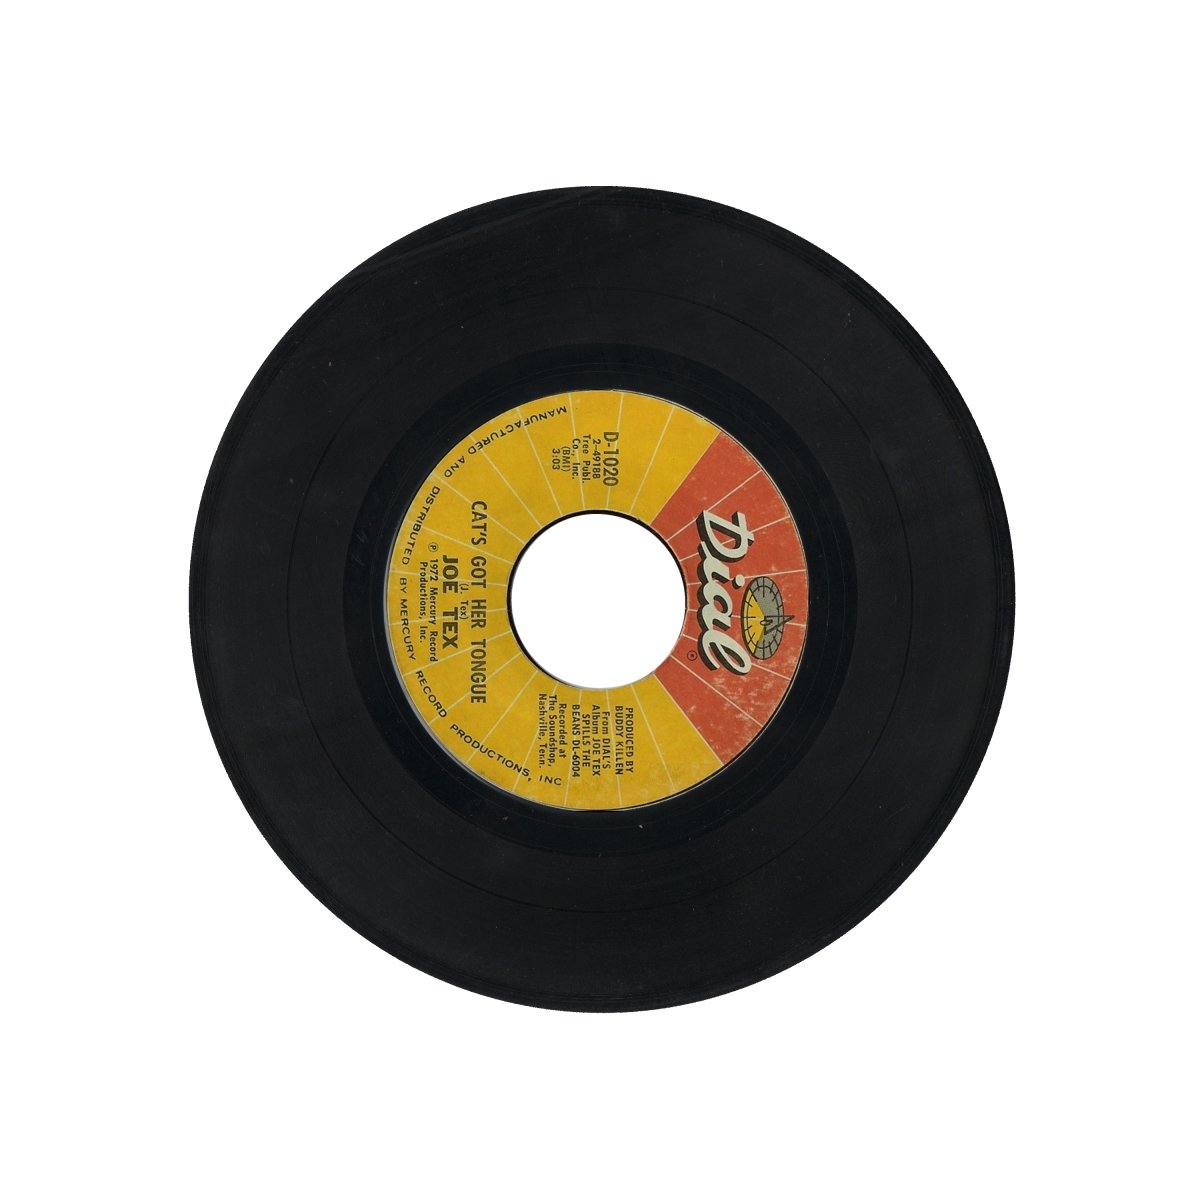 Joe Tex - Cat's Got Her Tongue / Woman Stealer 7" Vinyl